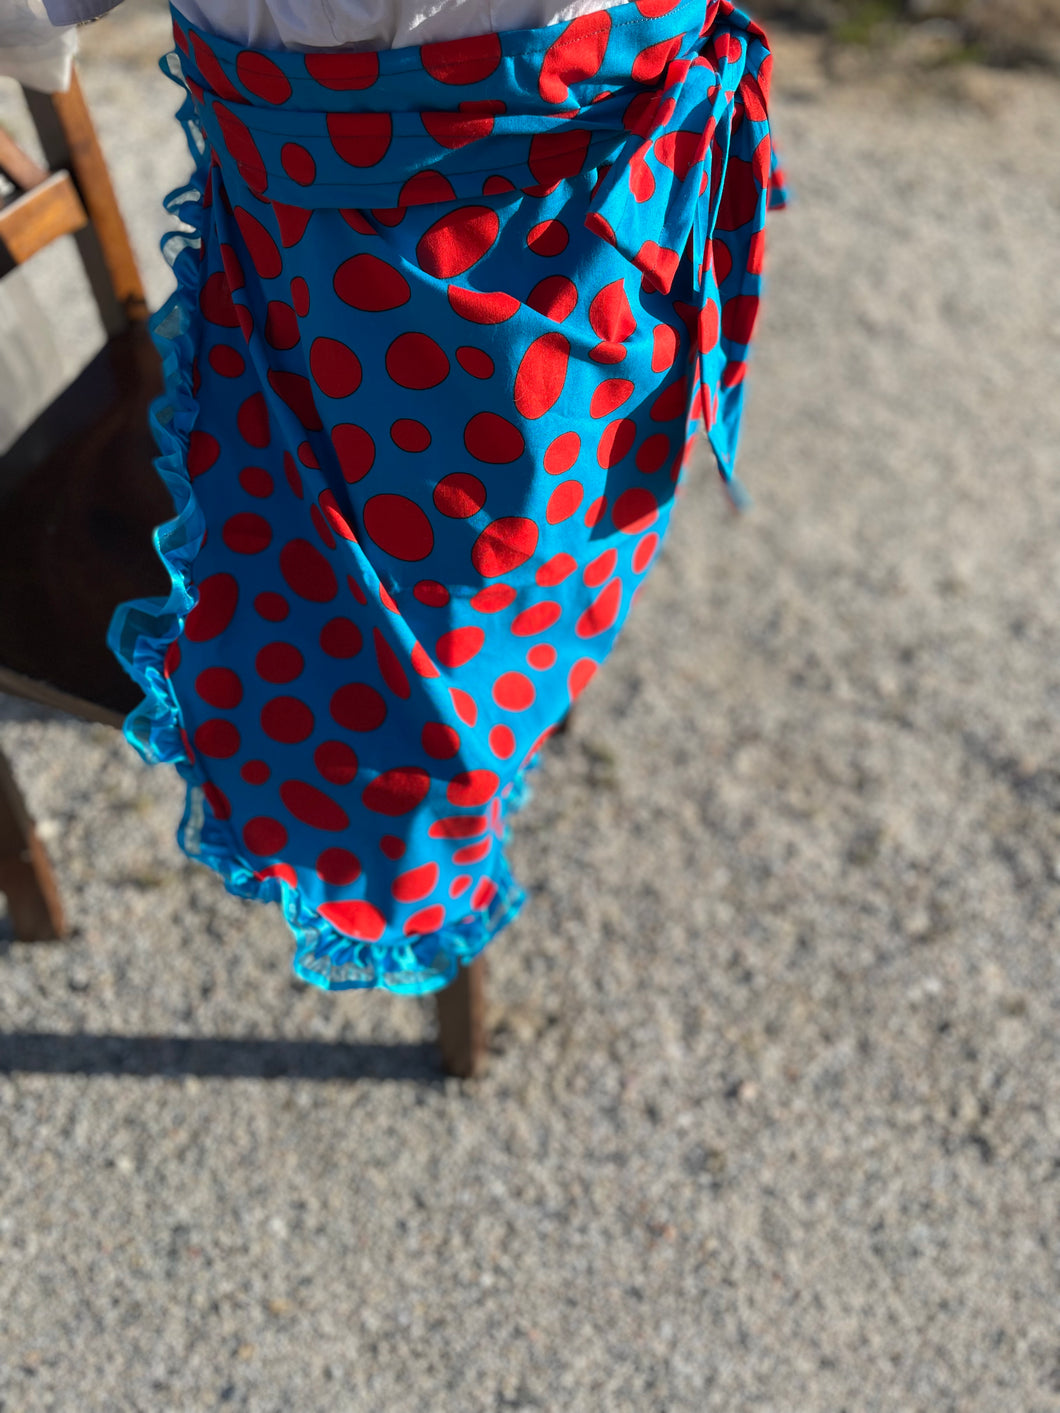 Retro apron(turquoise/ red polka dots)